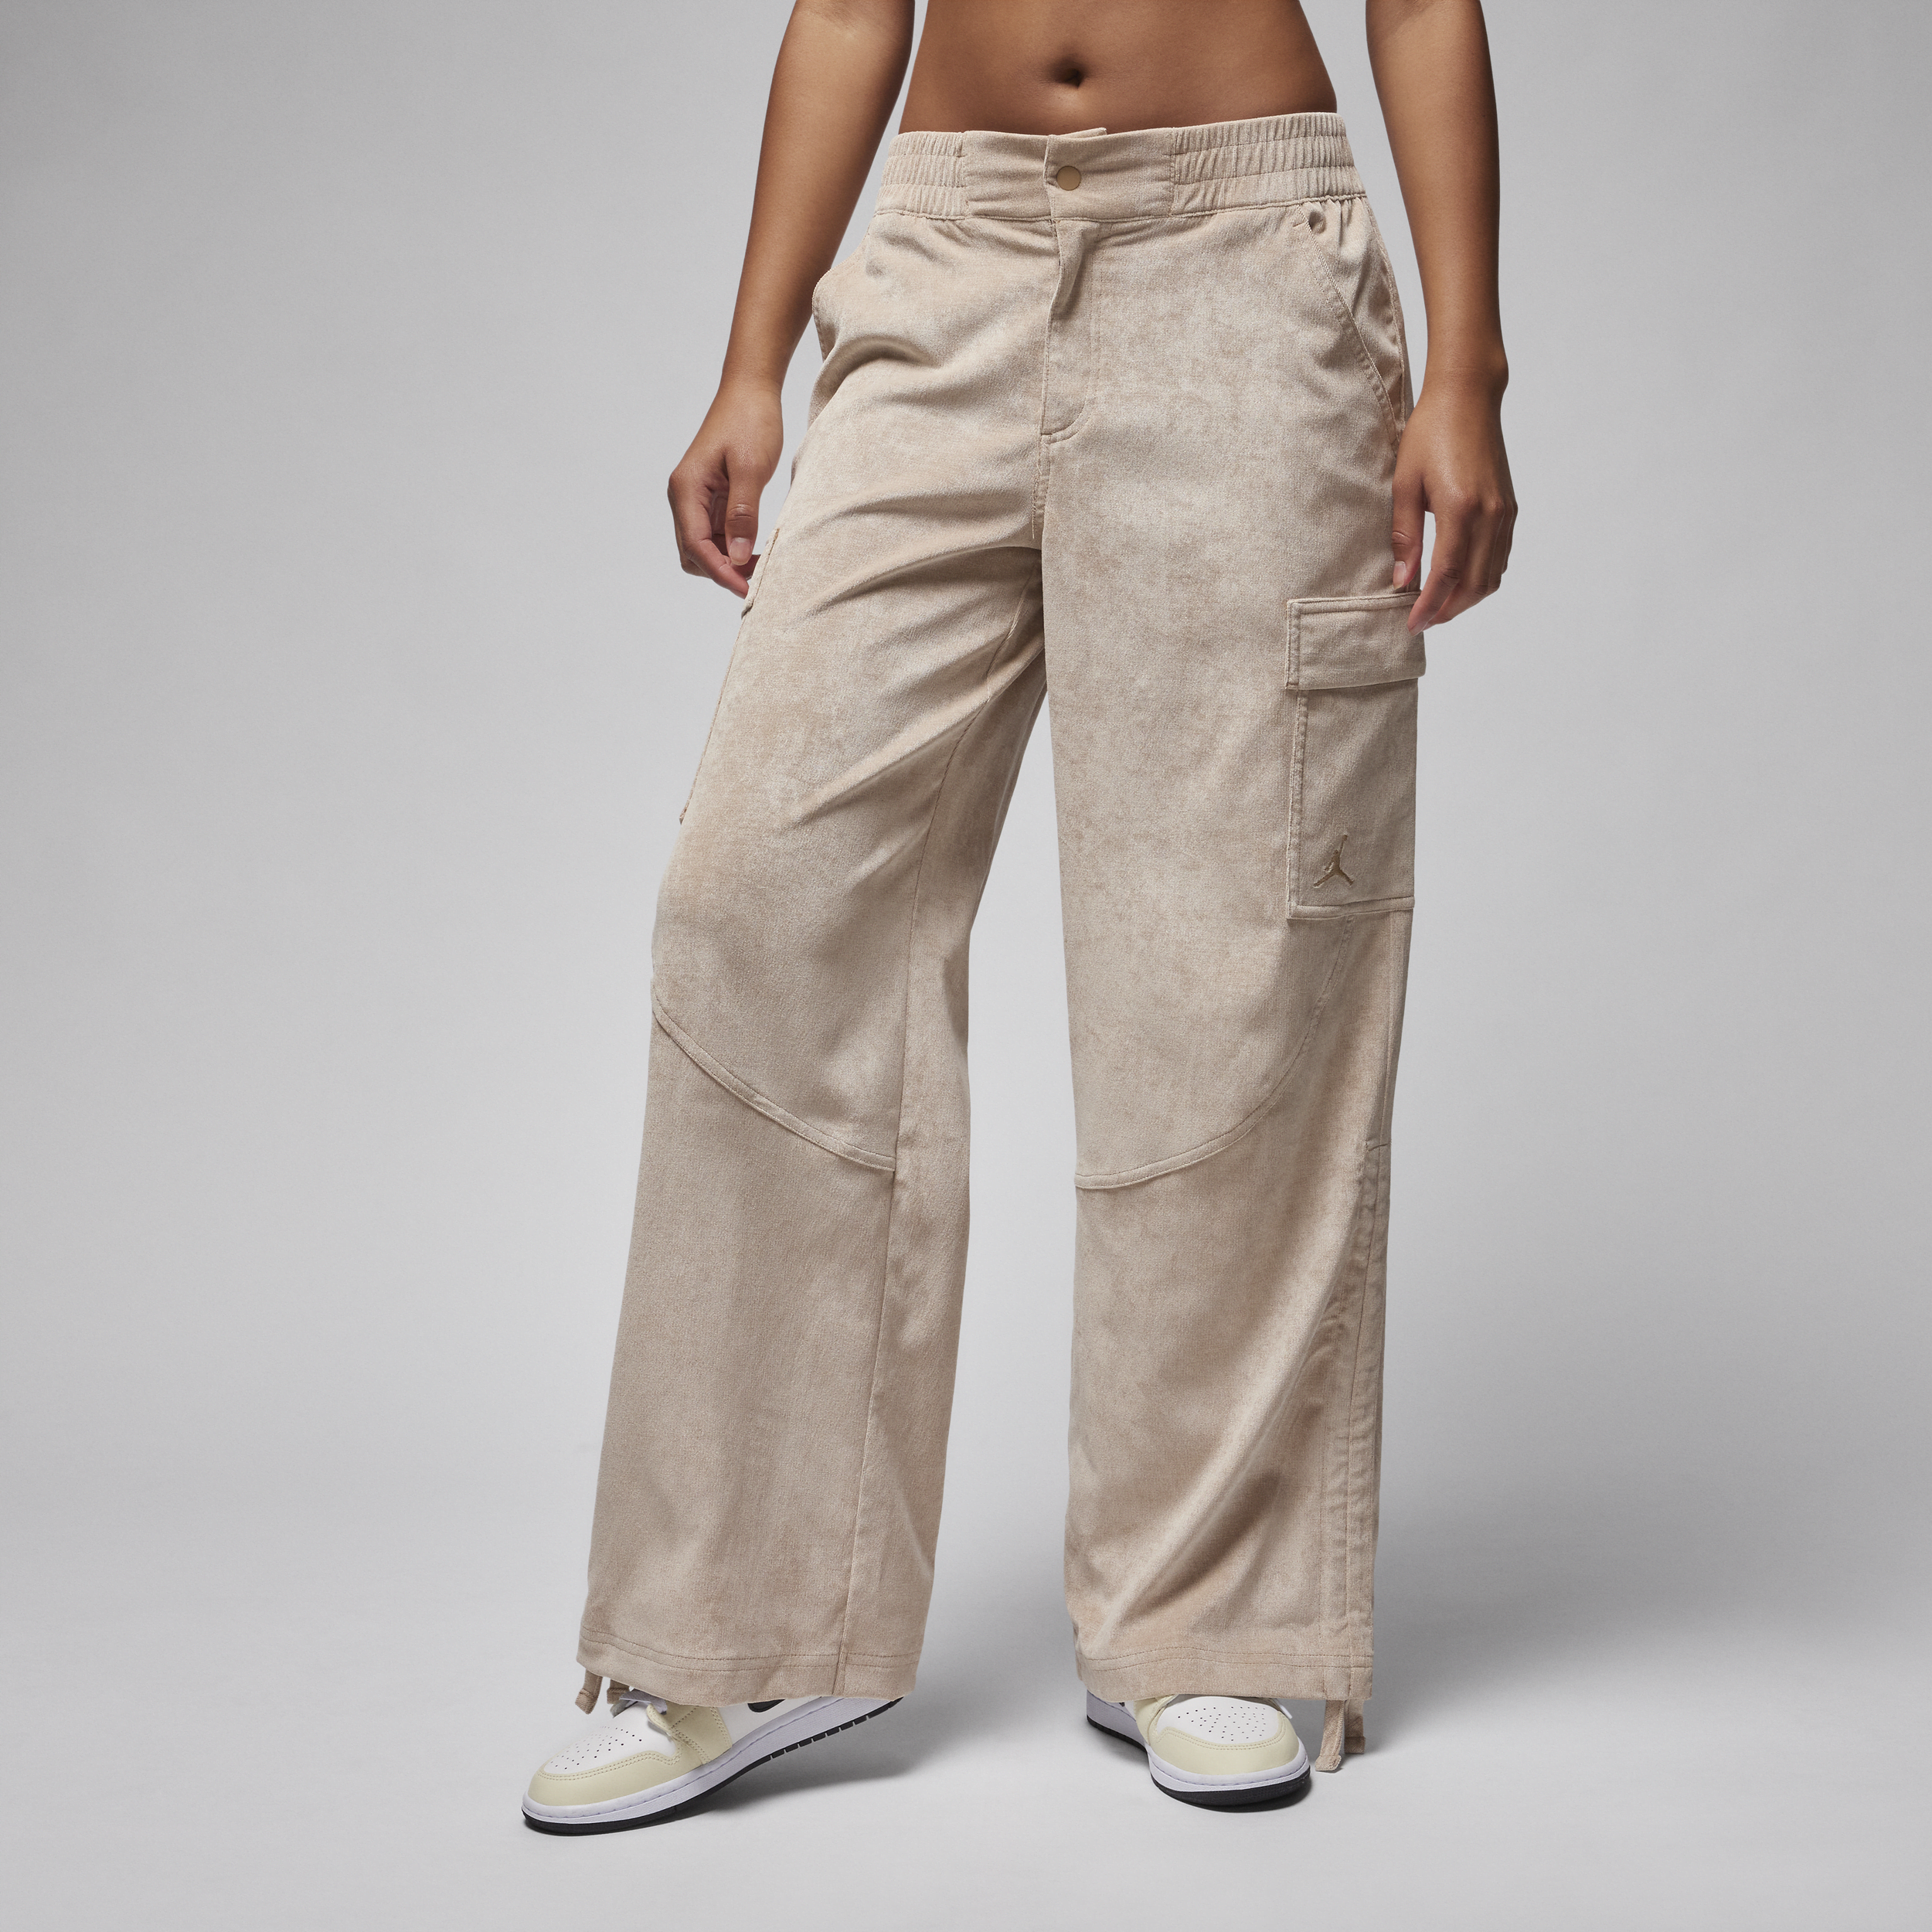 Nike Pantaloni Chicago in velluto a coste Jordan – Donna - Marrone